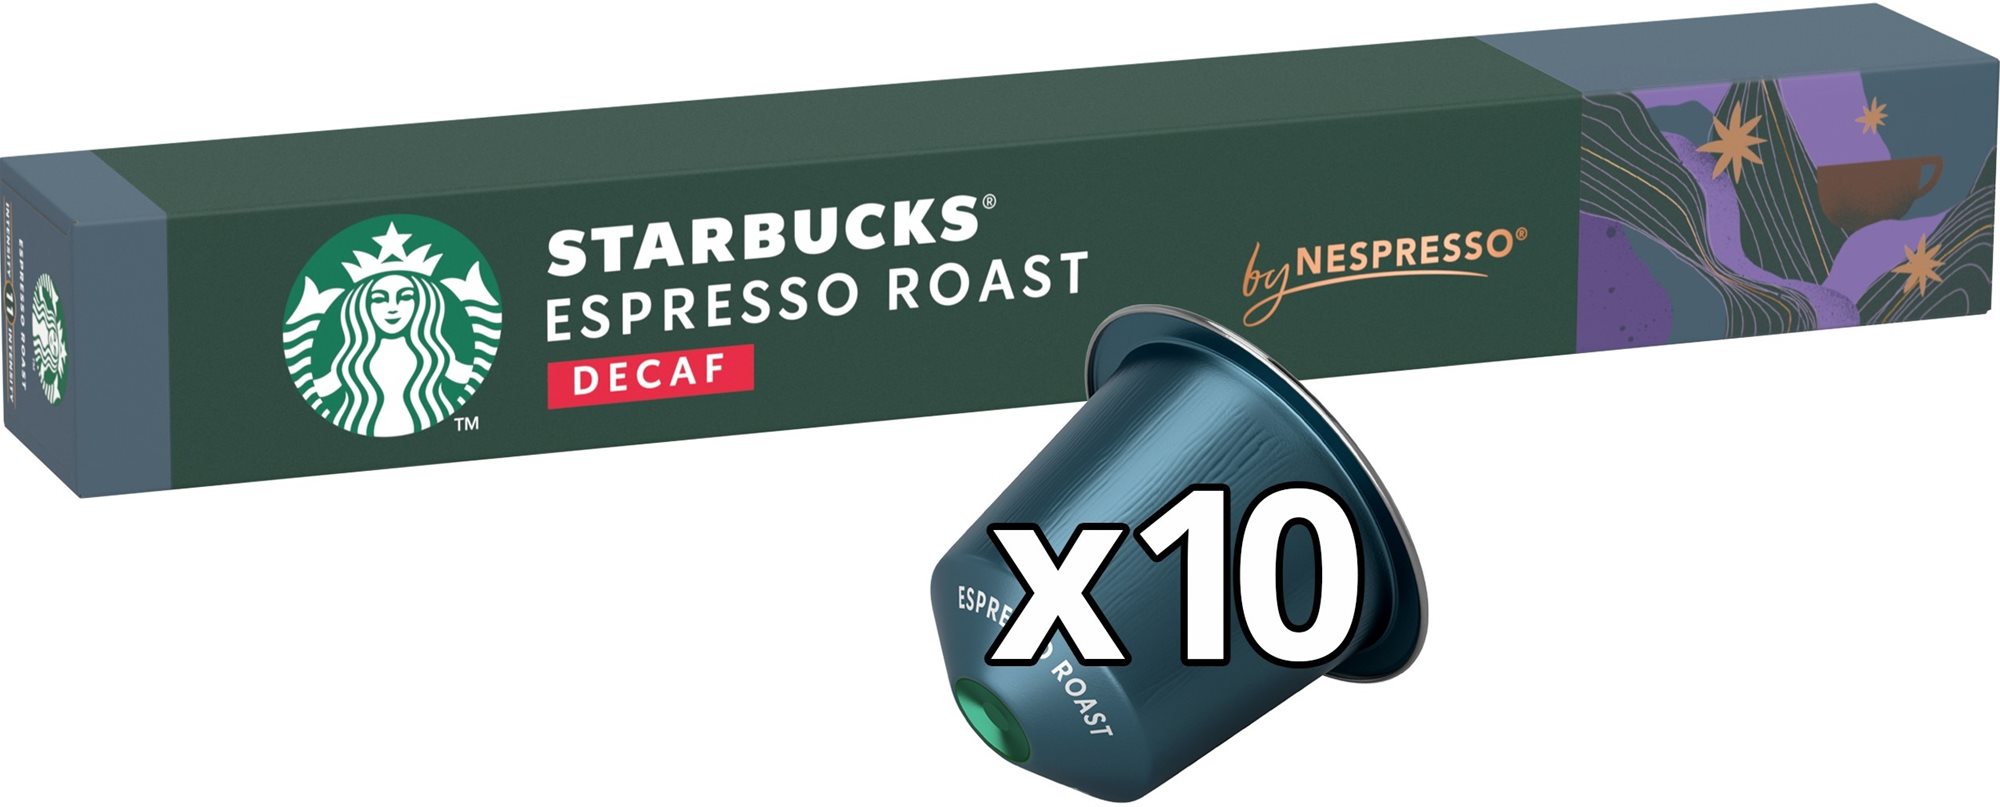 STARBUCKS® Espresso Roast Decaf by NESPRESSO® Dark Roast 10 db-os csomag, 57g